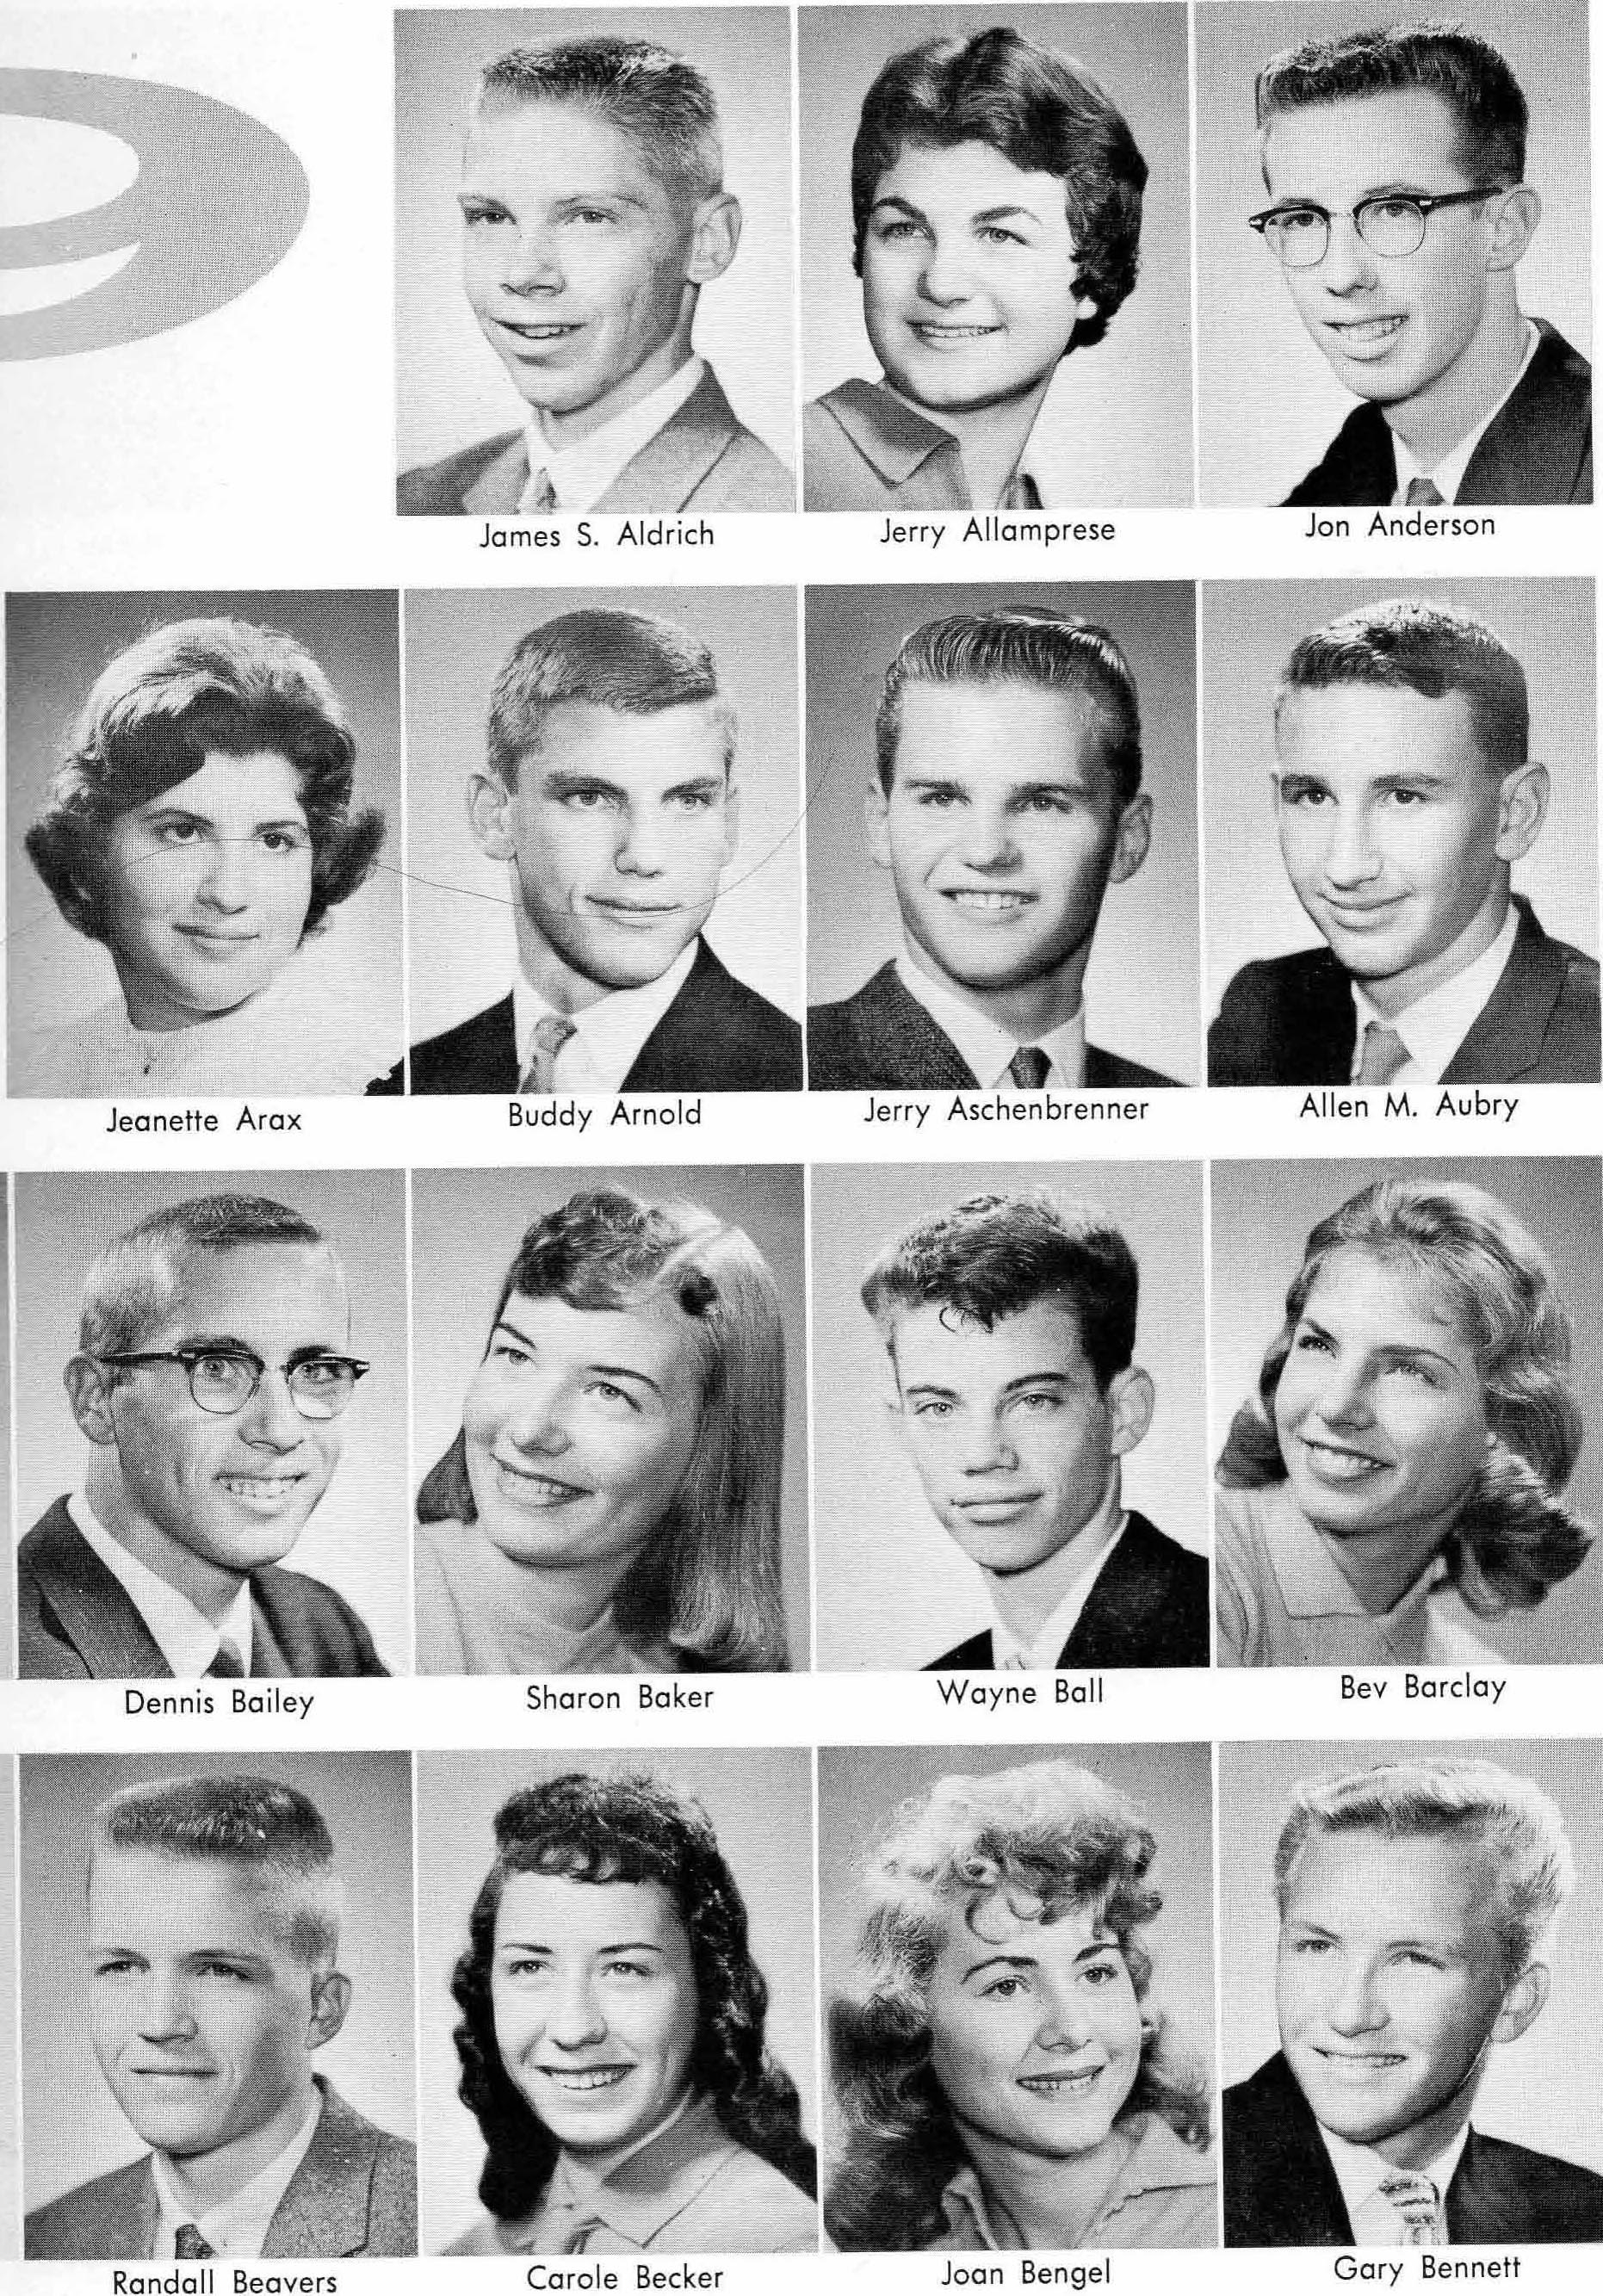 Jon Anderson - 1959 Senior Class